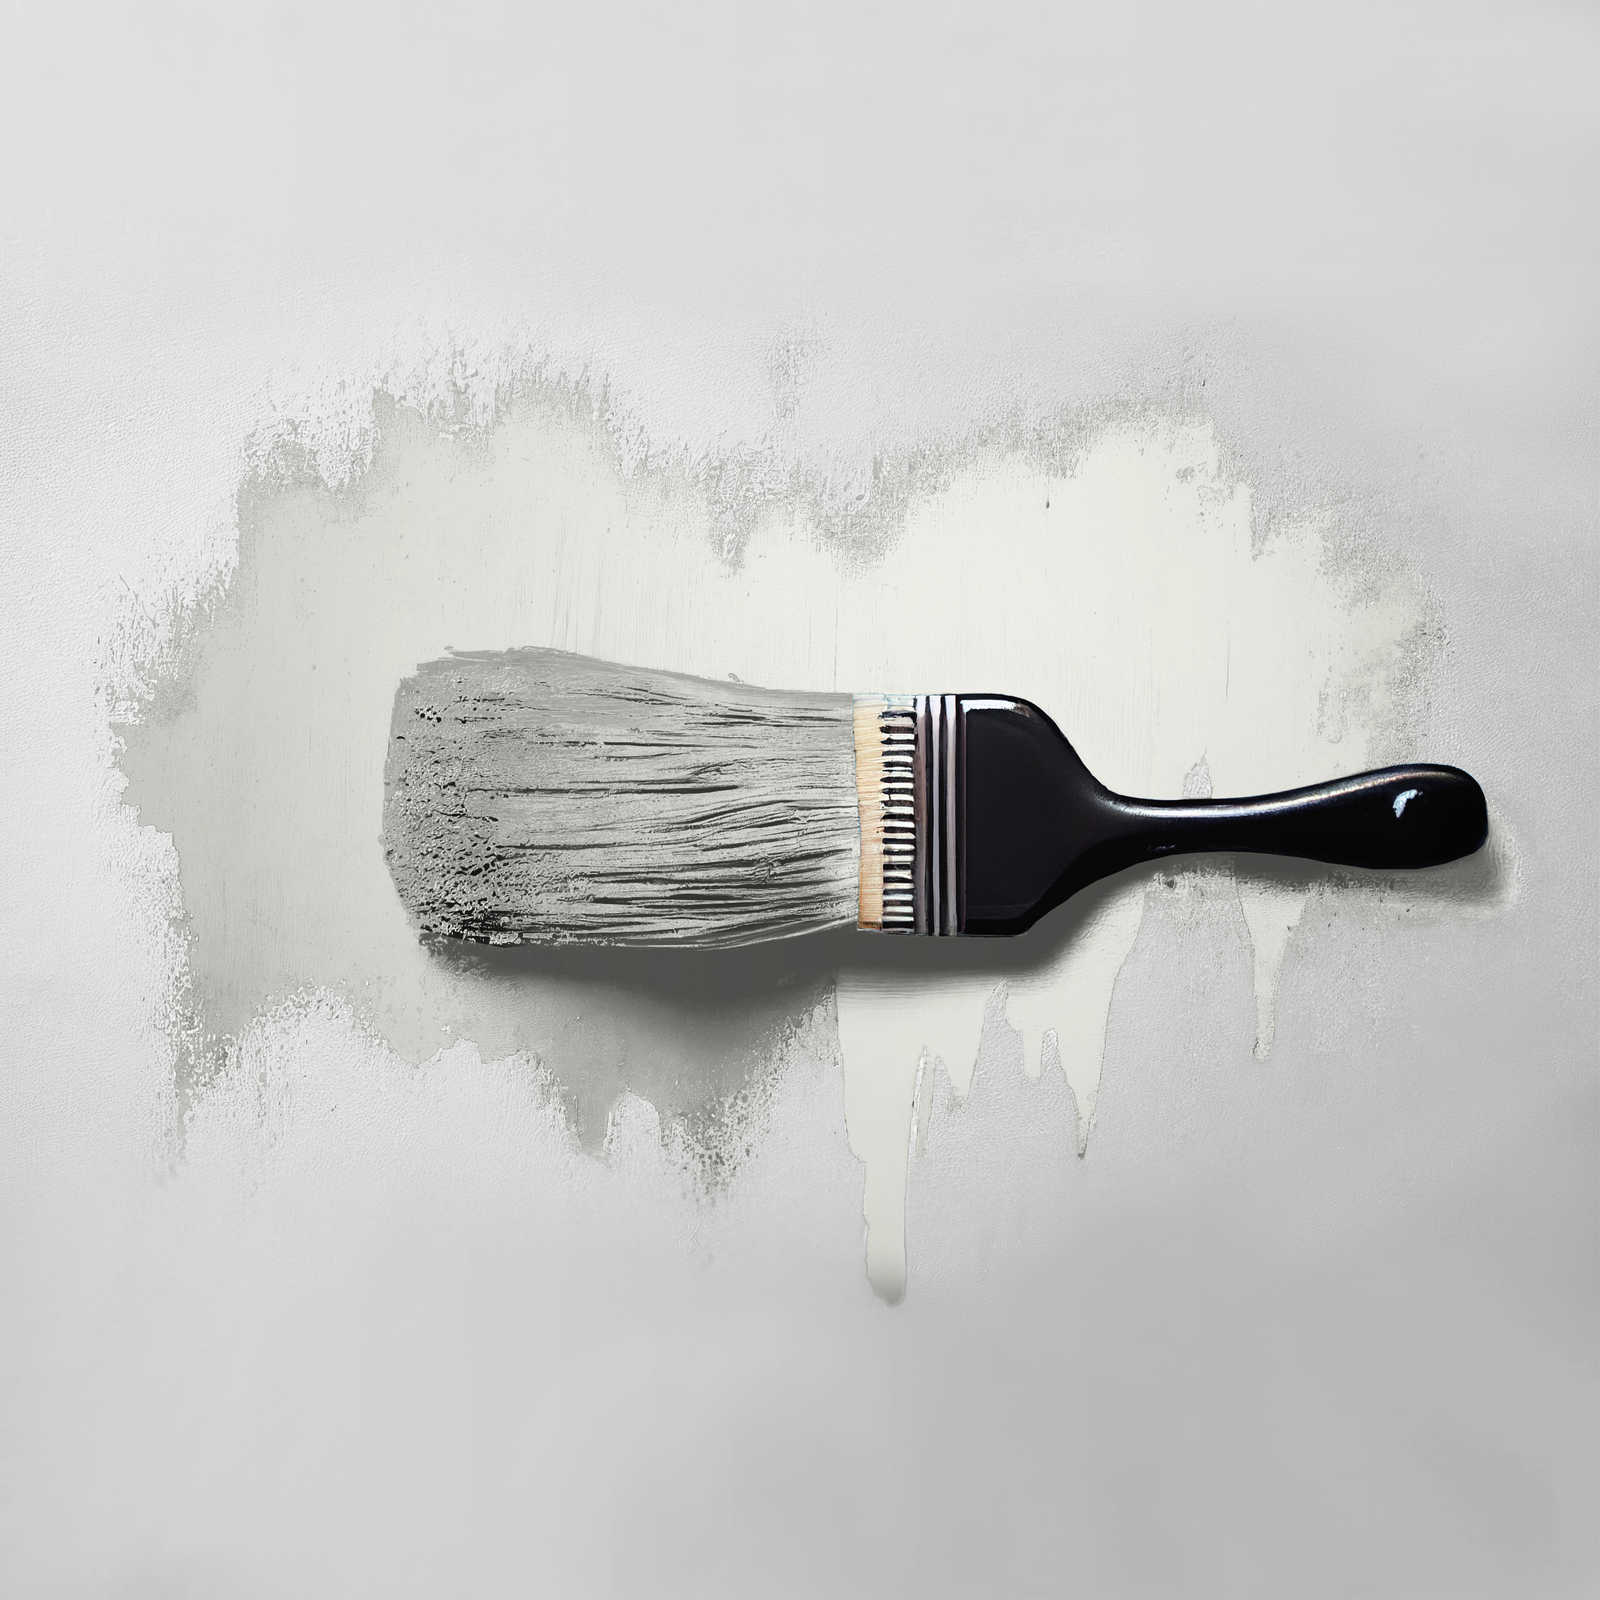             Pittura murale TCK1008 »Shady Sugar« in bianco caldo – 2,5 litri
        